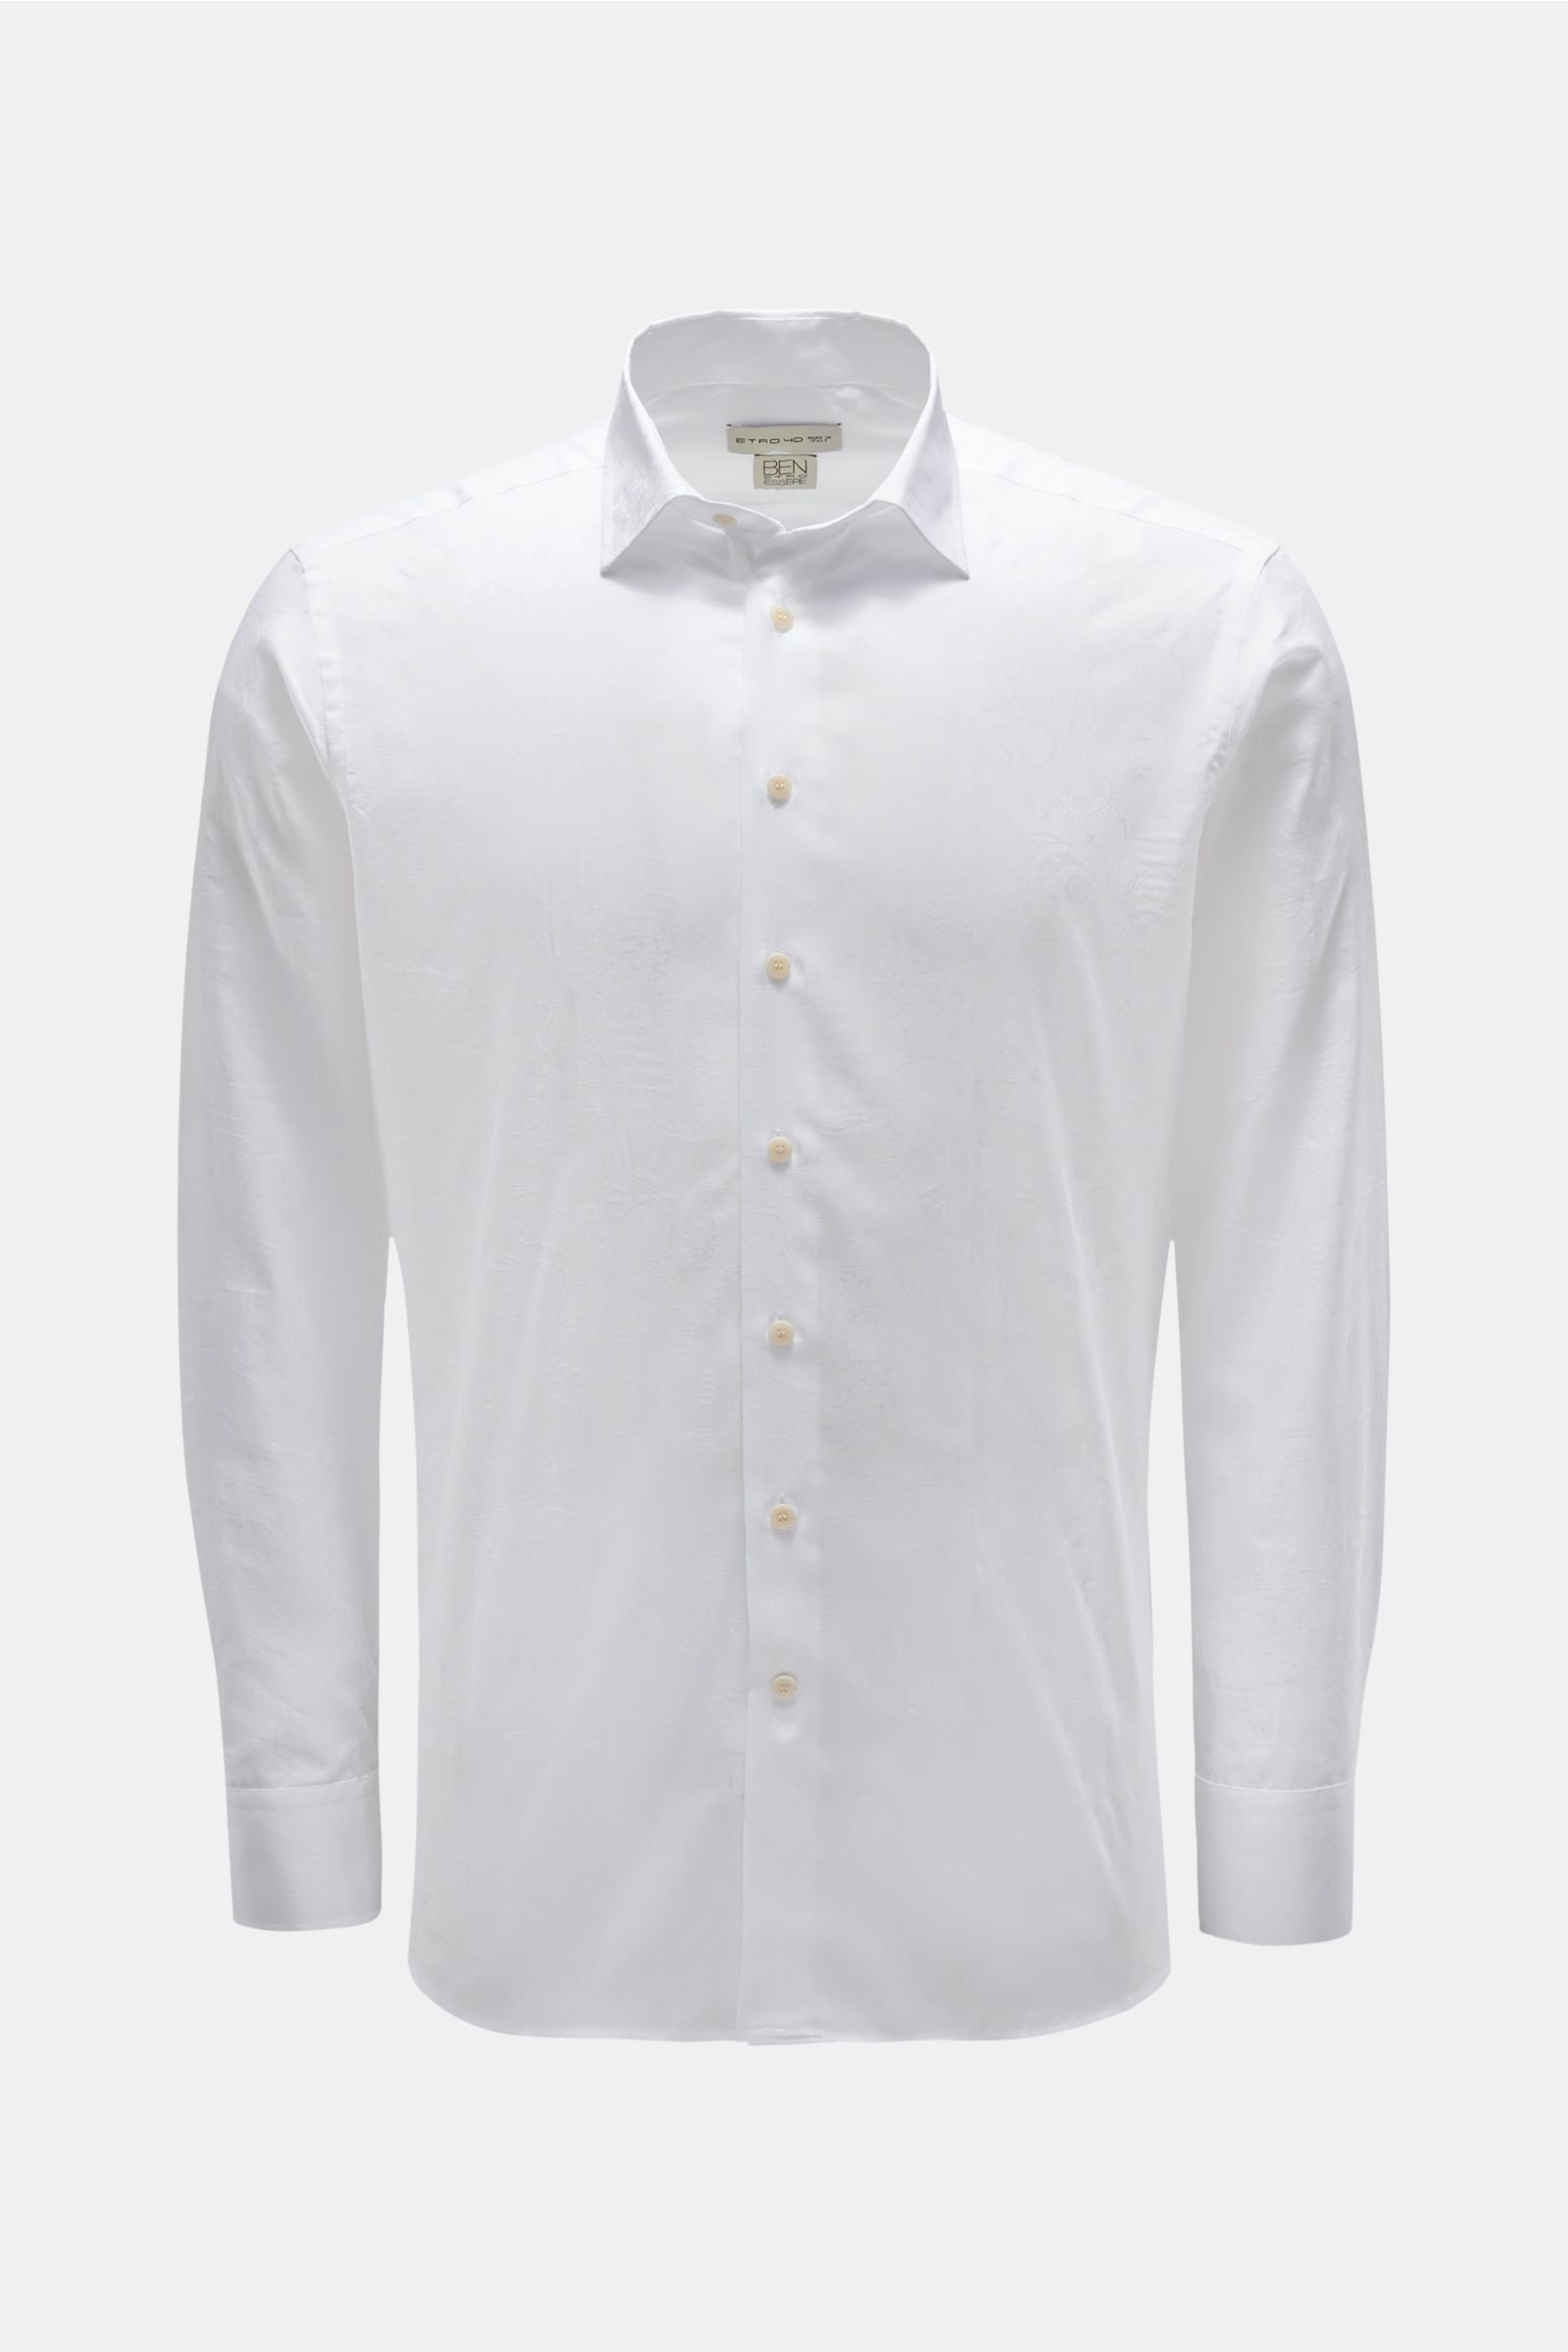 Jacquard-Hemd schmaler Kragen weiß gemustert